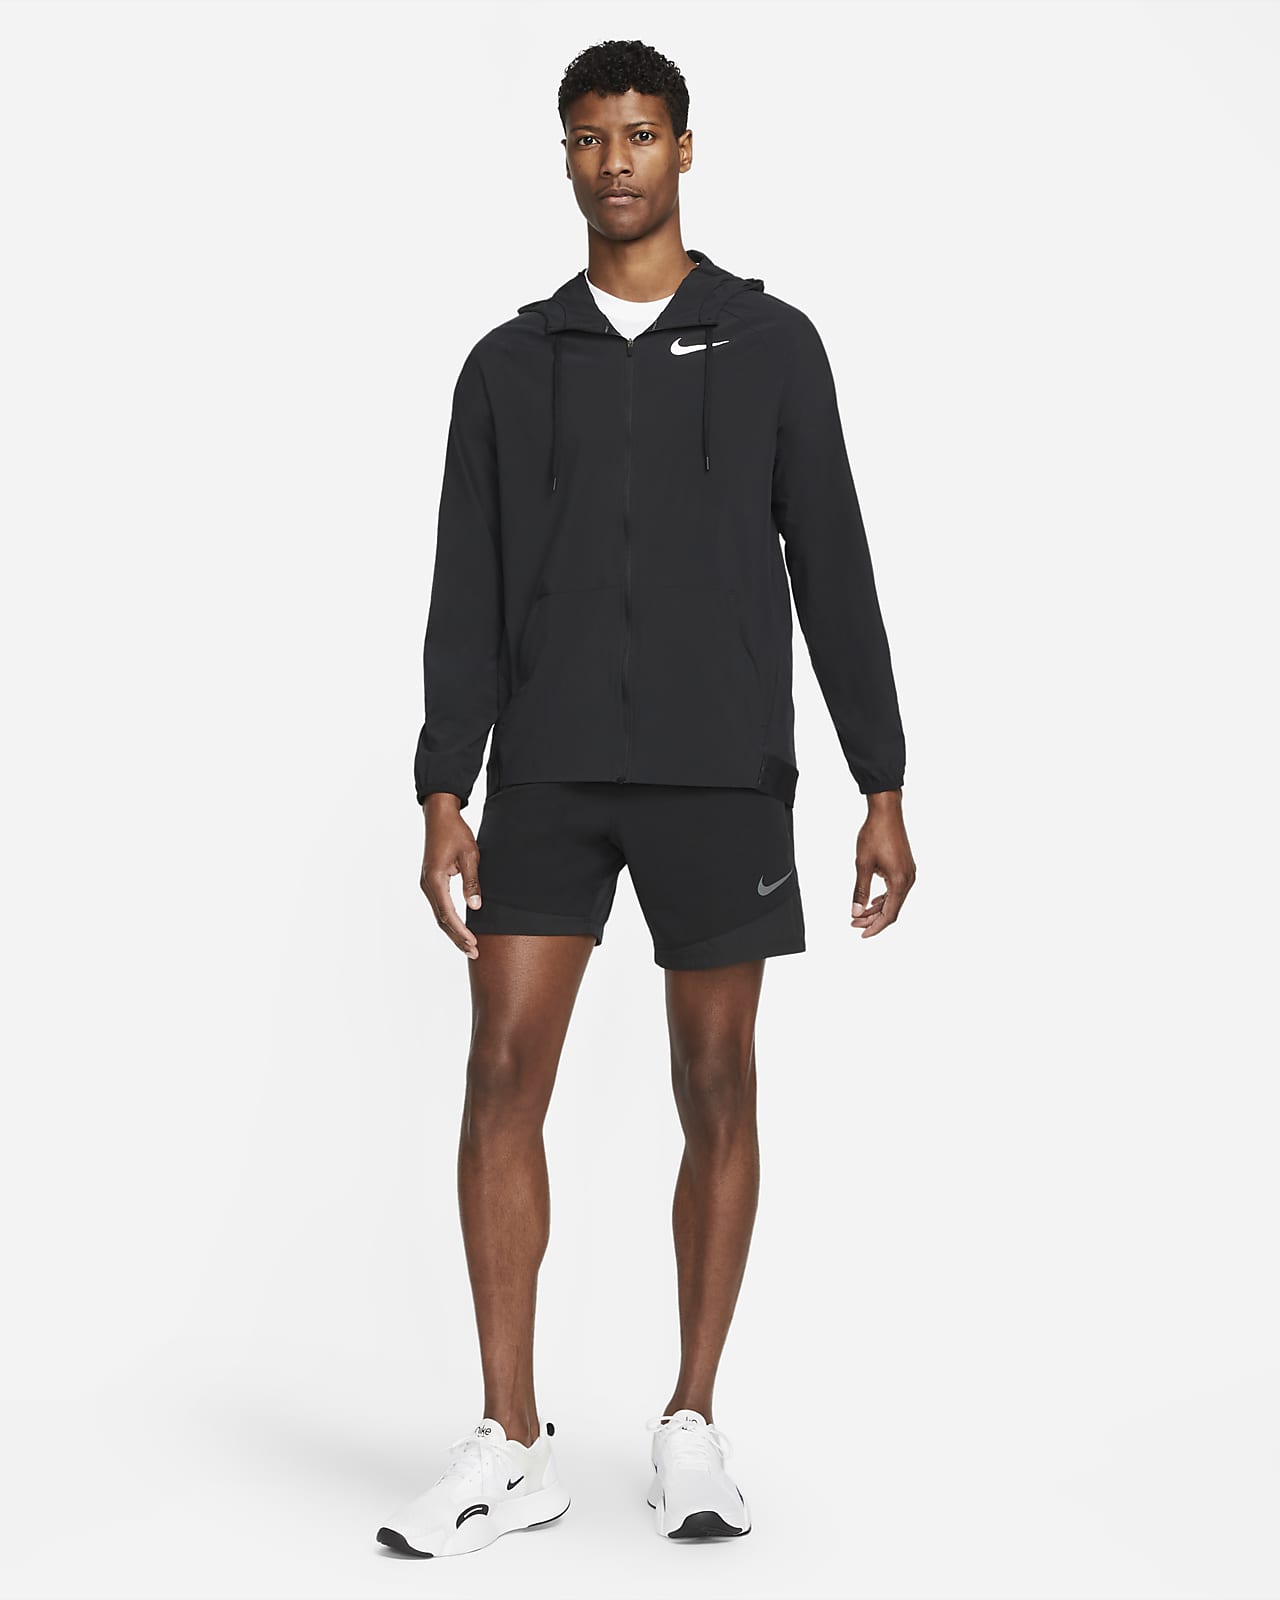 Nike Pro Dri-FIT Flex Vent Max Men's Full-Zip Hooded Training Jacket.